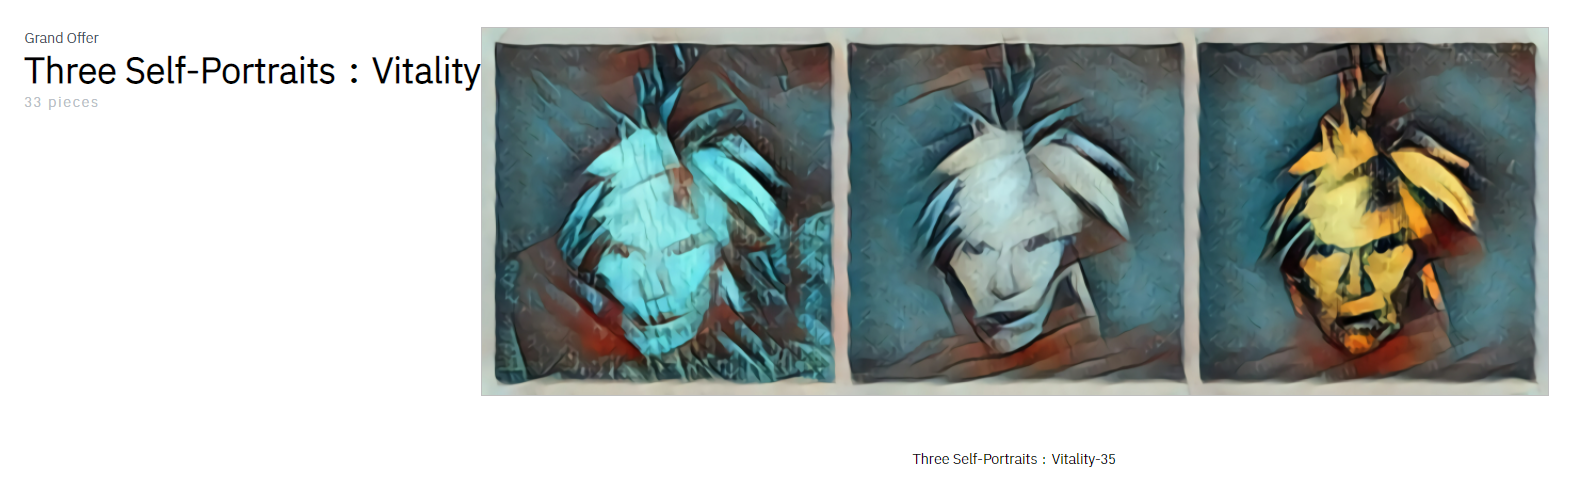 Three Self-Portraits Vitality.PNG